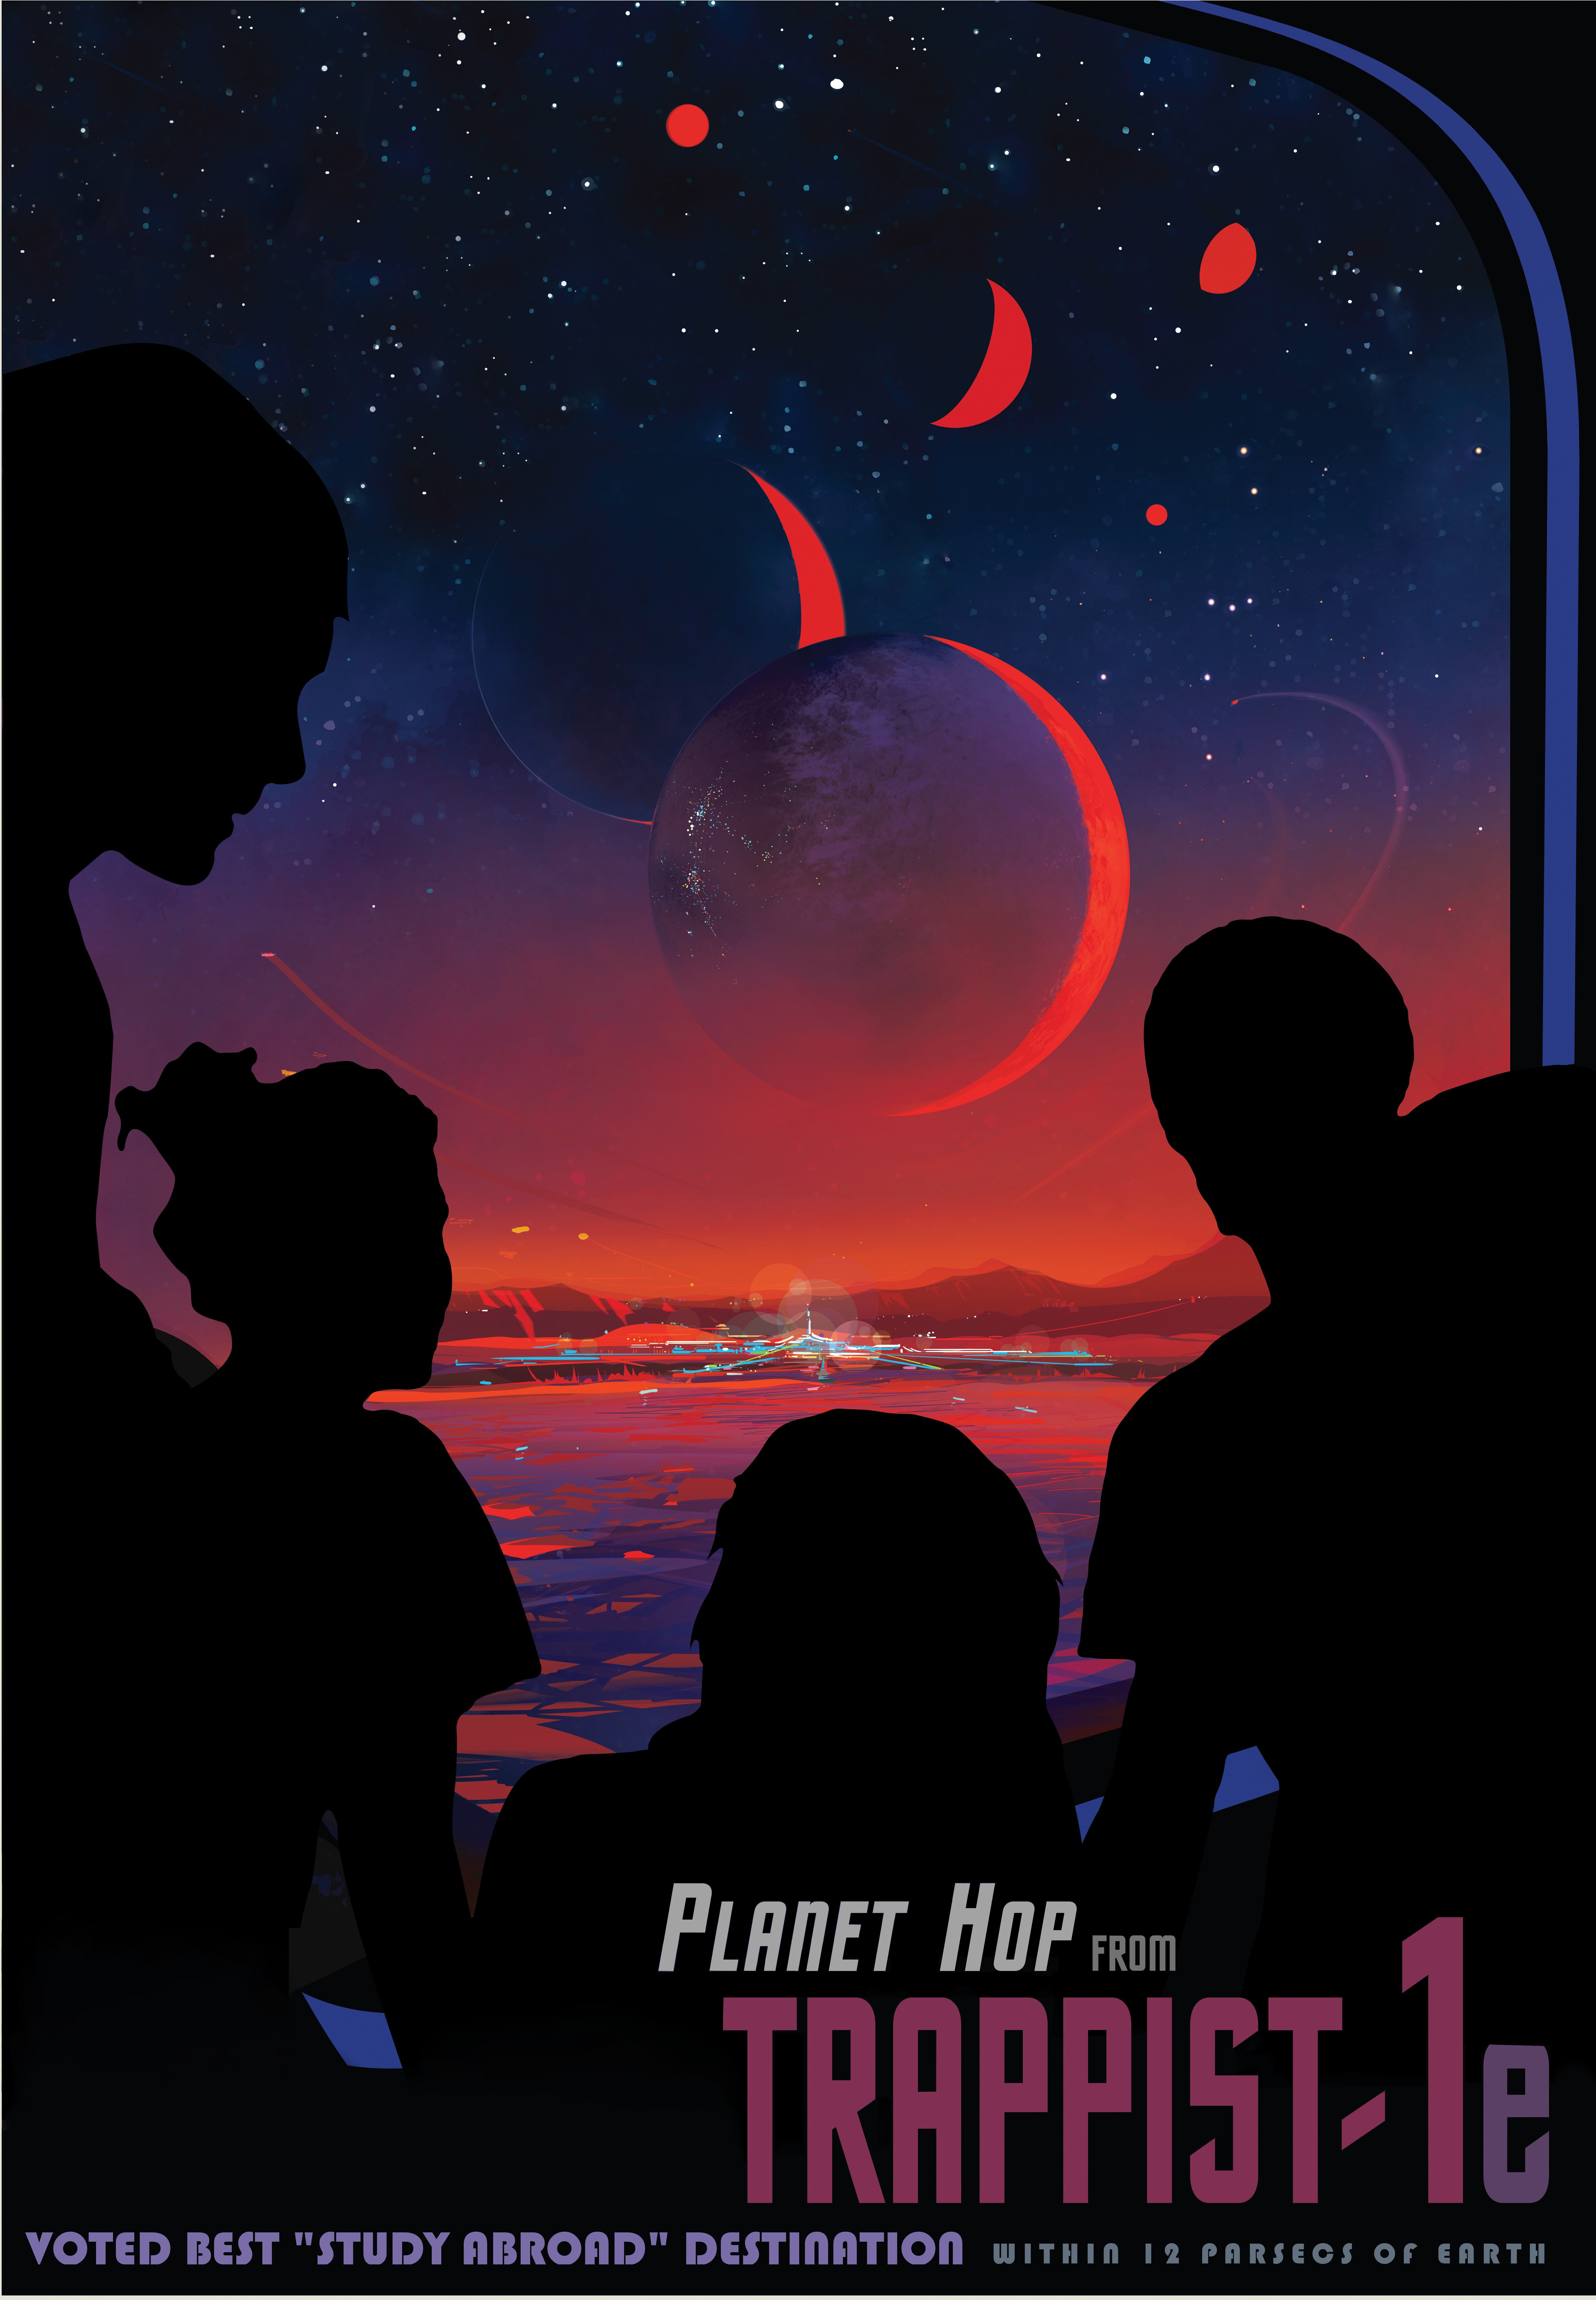 A poster of TRAPPIST-1e.